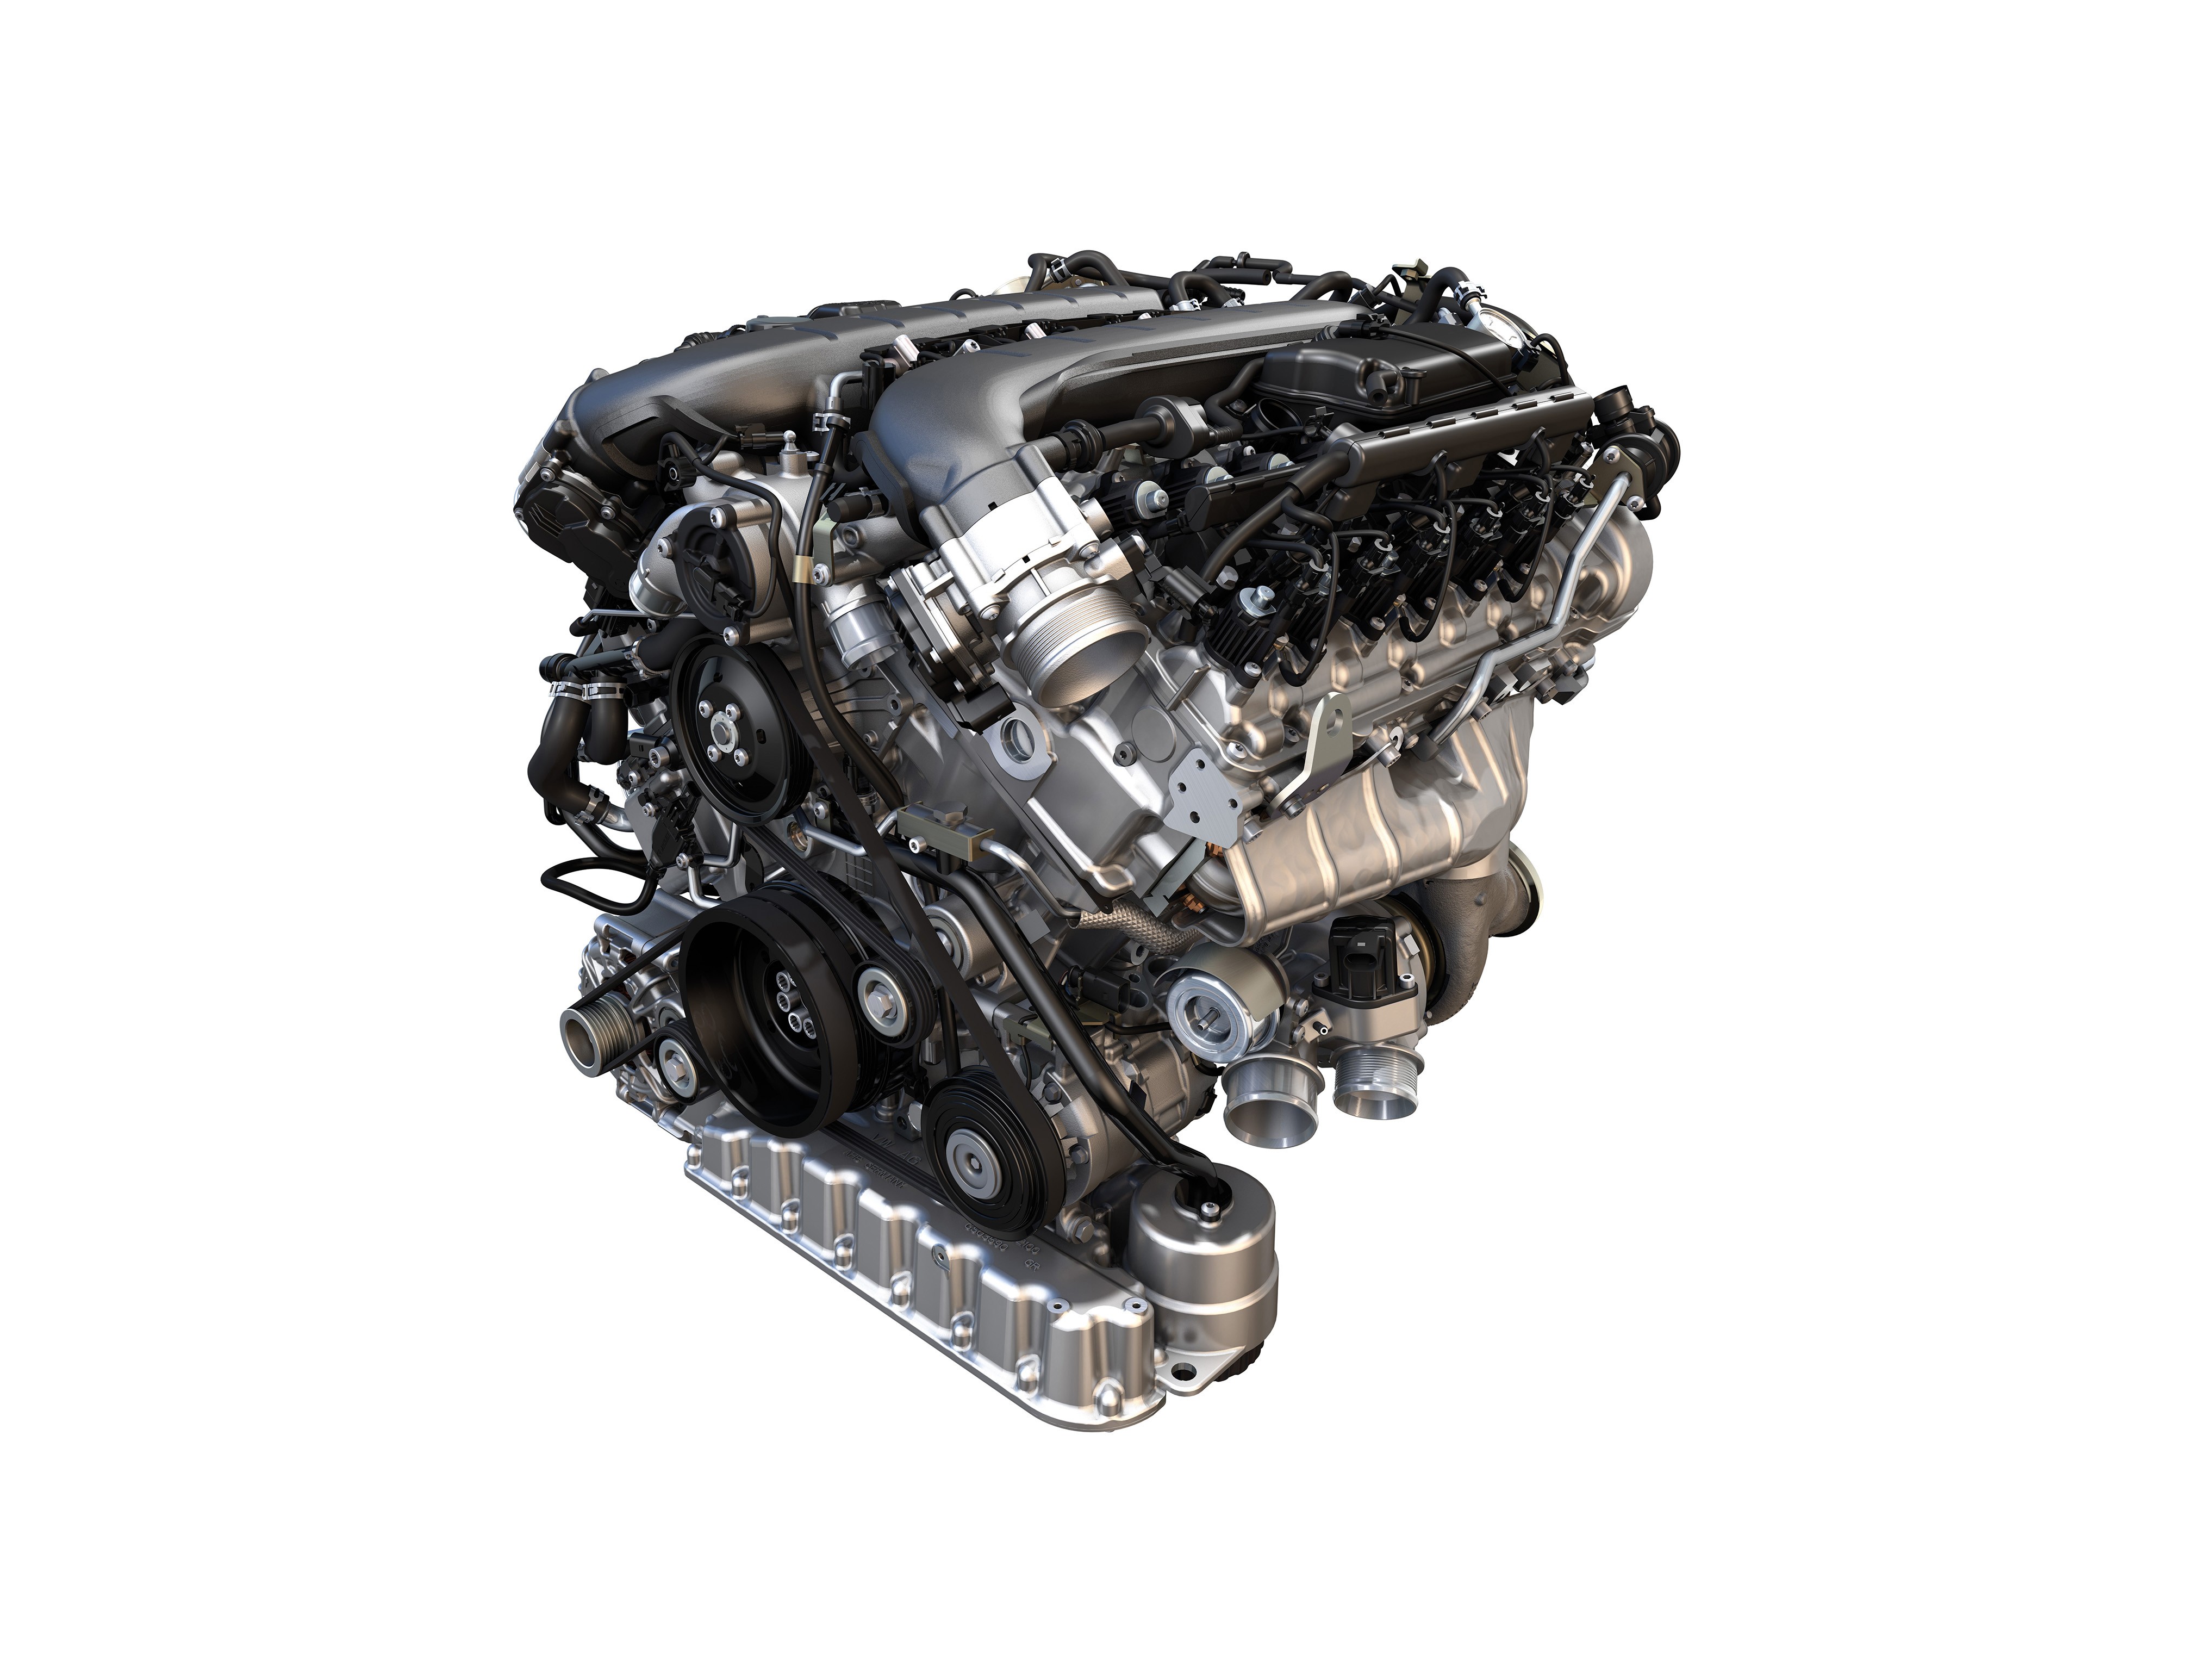 Volkswagen Unveils New 6 Liter W12 Tsi Twin Turbo Engine With 608 Hp Autoevolution